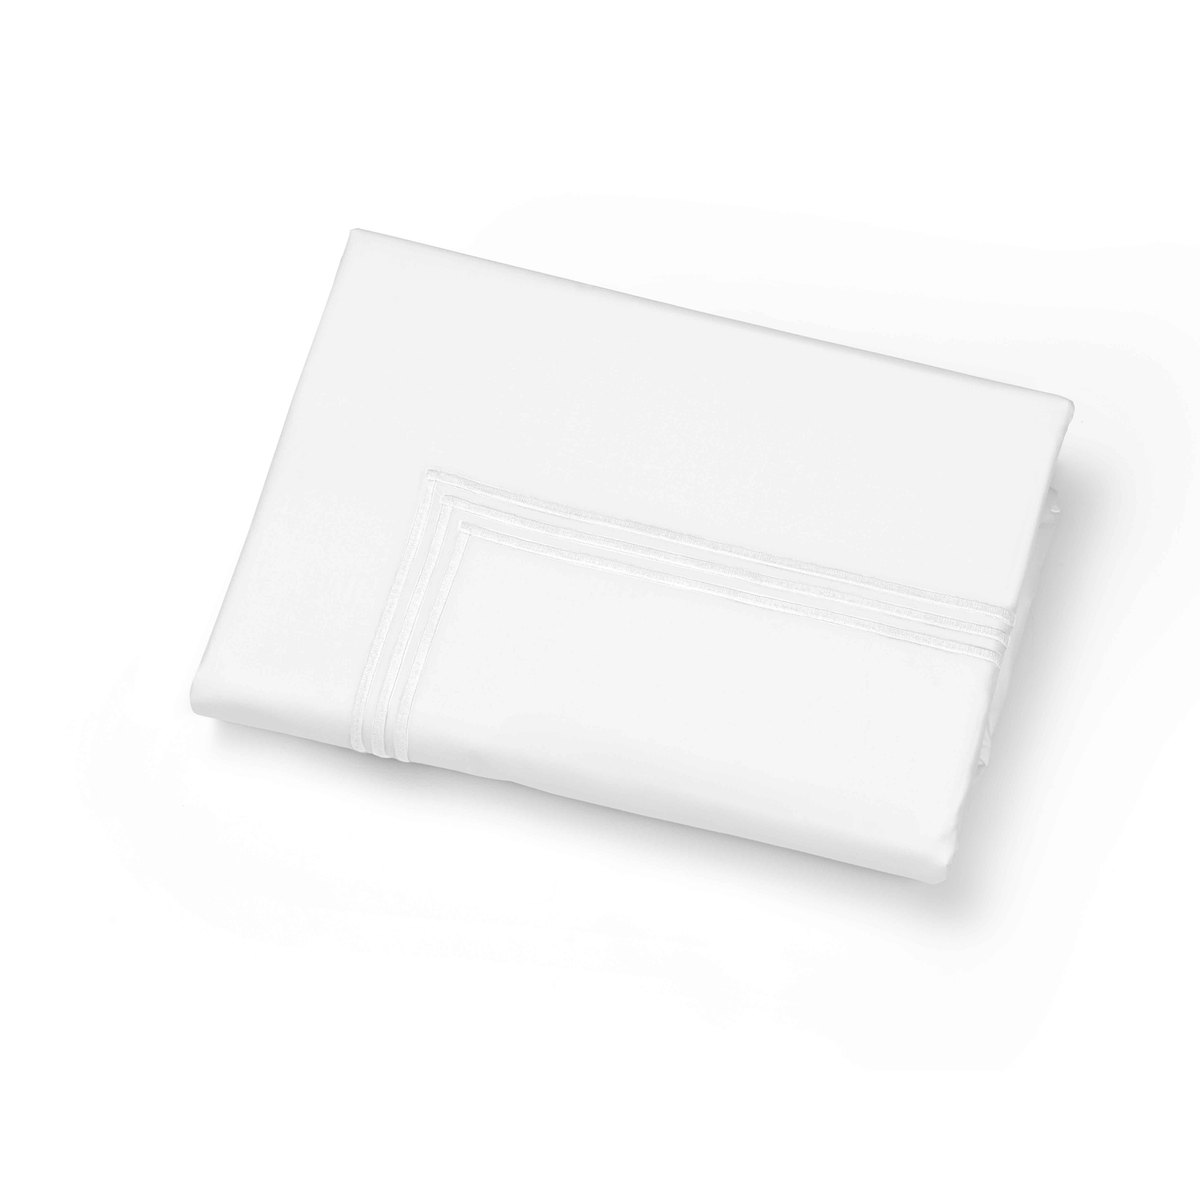 Folded Duvet Cover of Signoria Platinum Percale Bedding in White/White Color